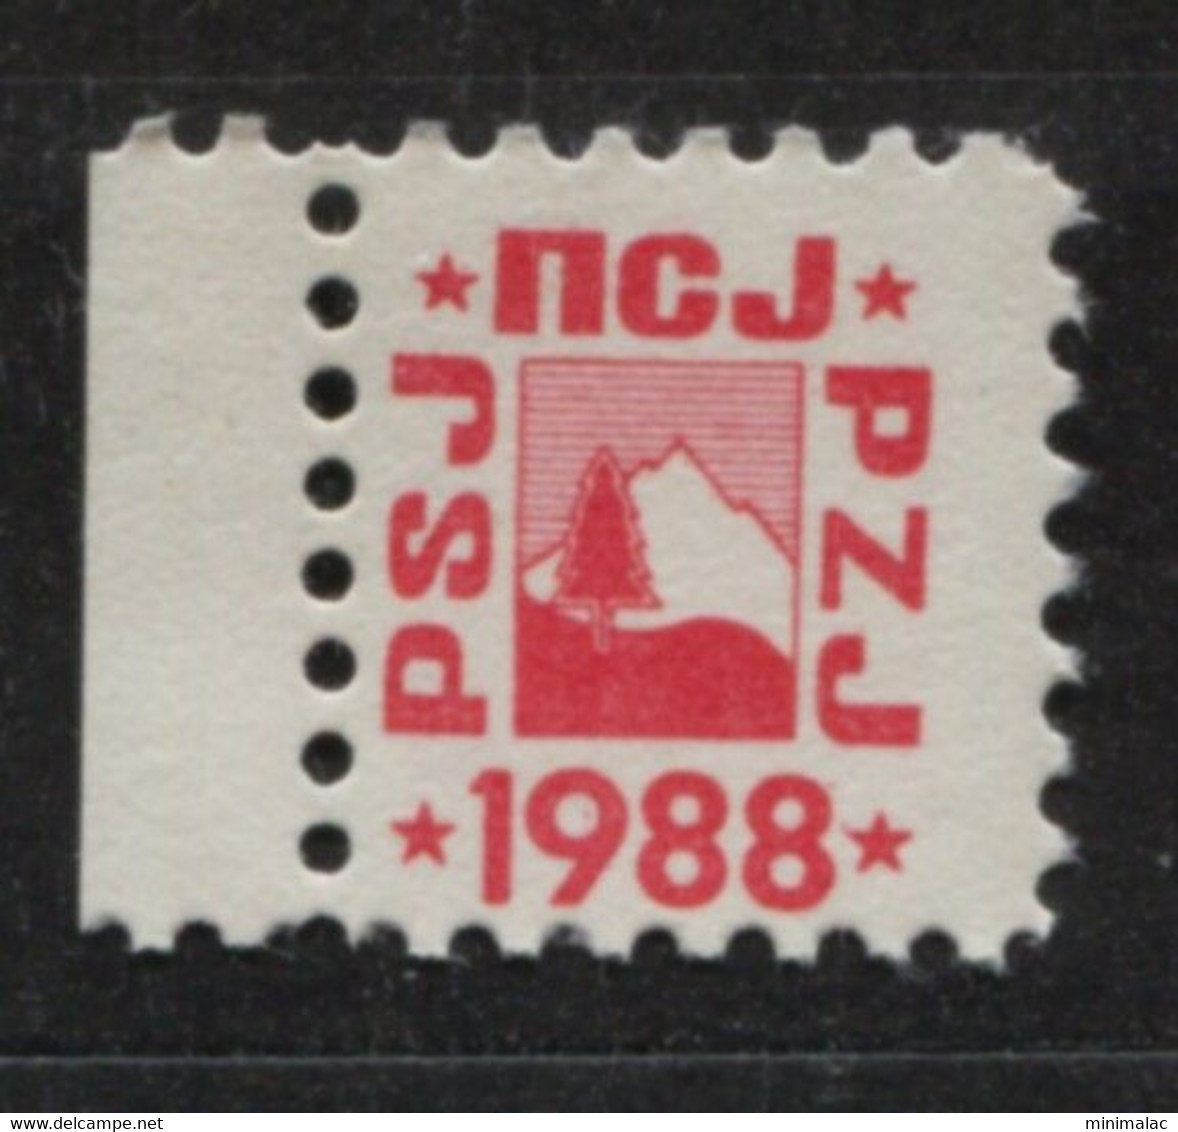 Yugoslavia 1988, Stamp For Membership Mountaineering Association Of Yugoslavia, Revenue, Tax Stamp, Cinderella, Red - Service